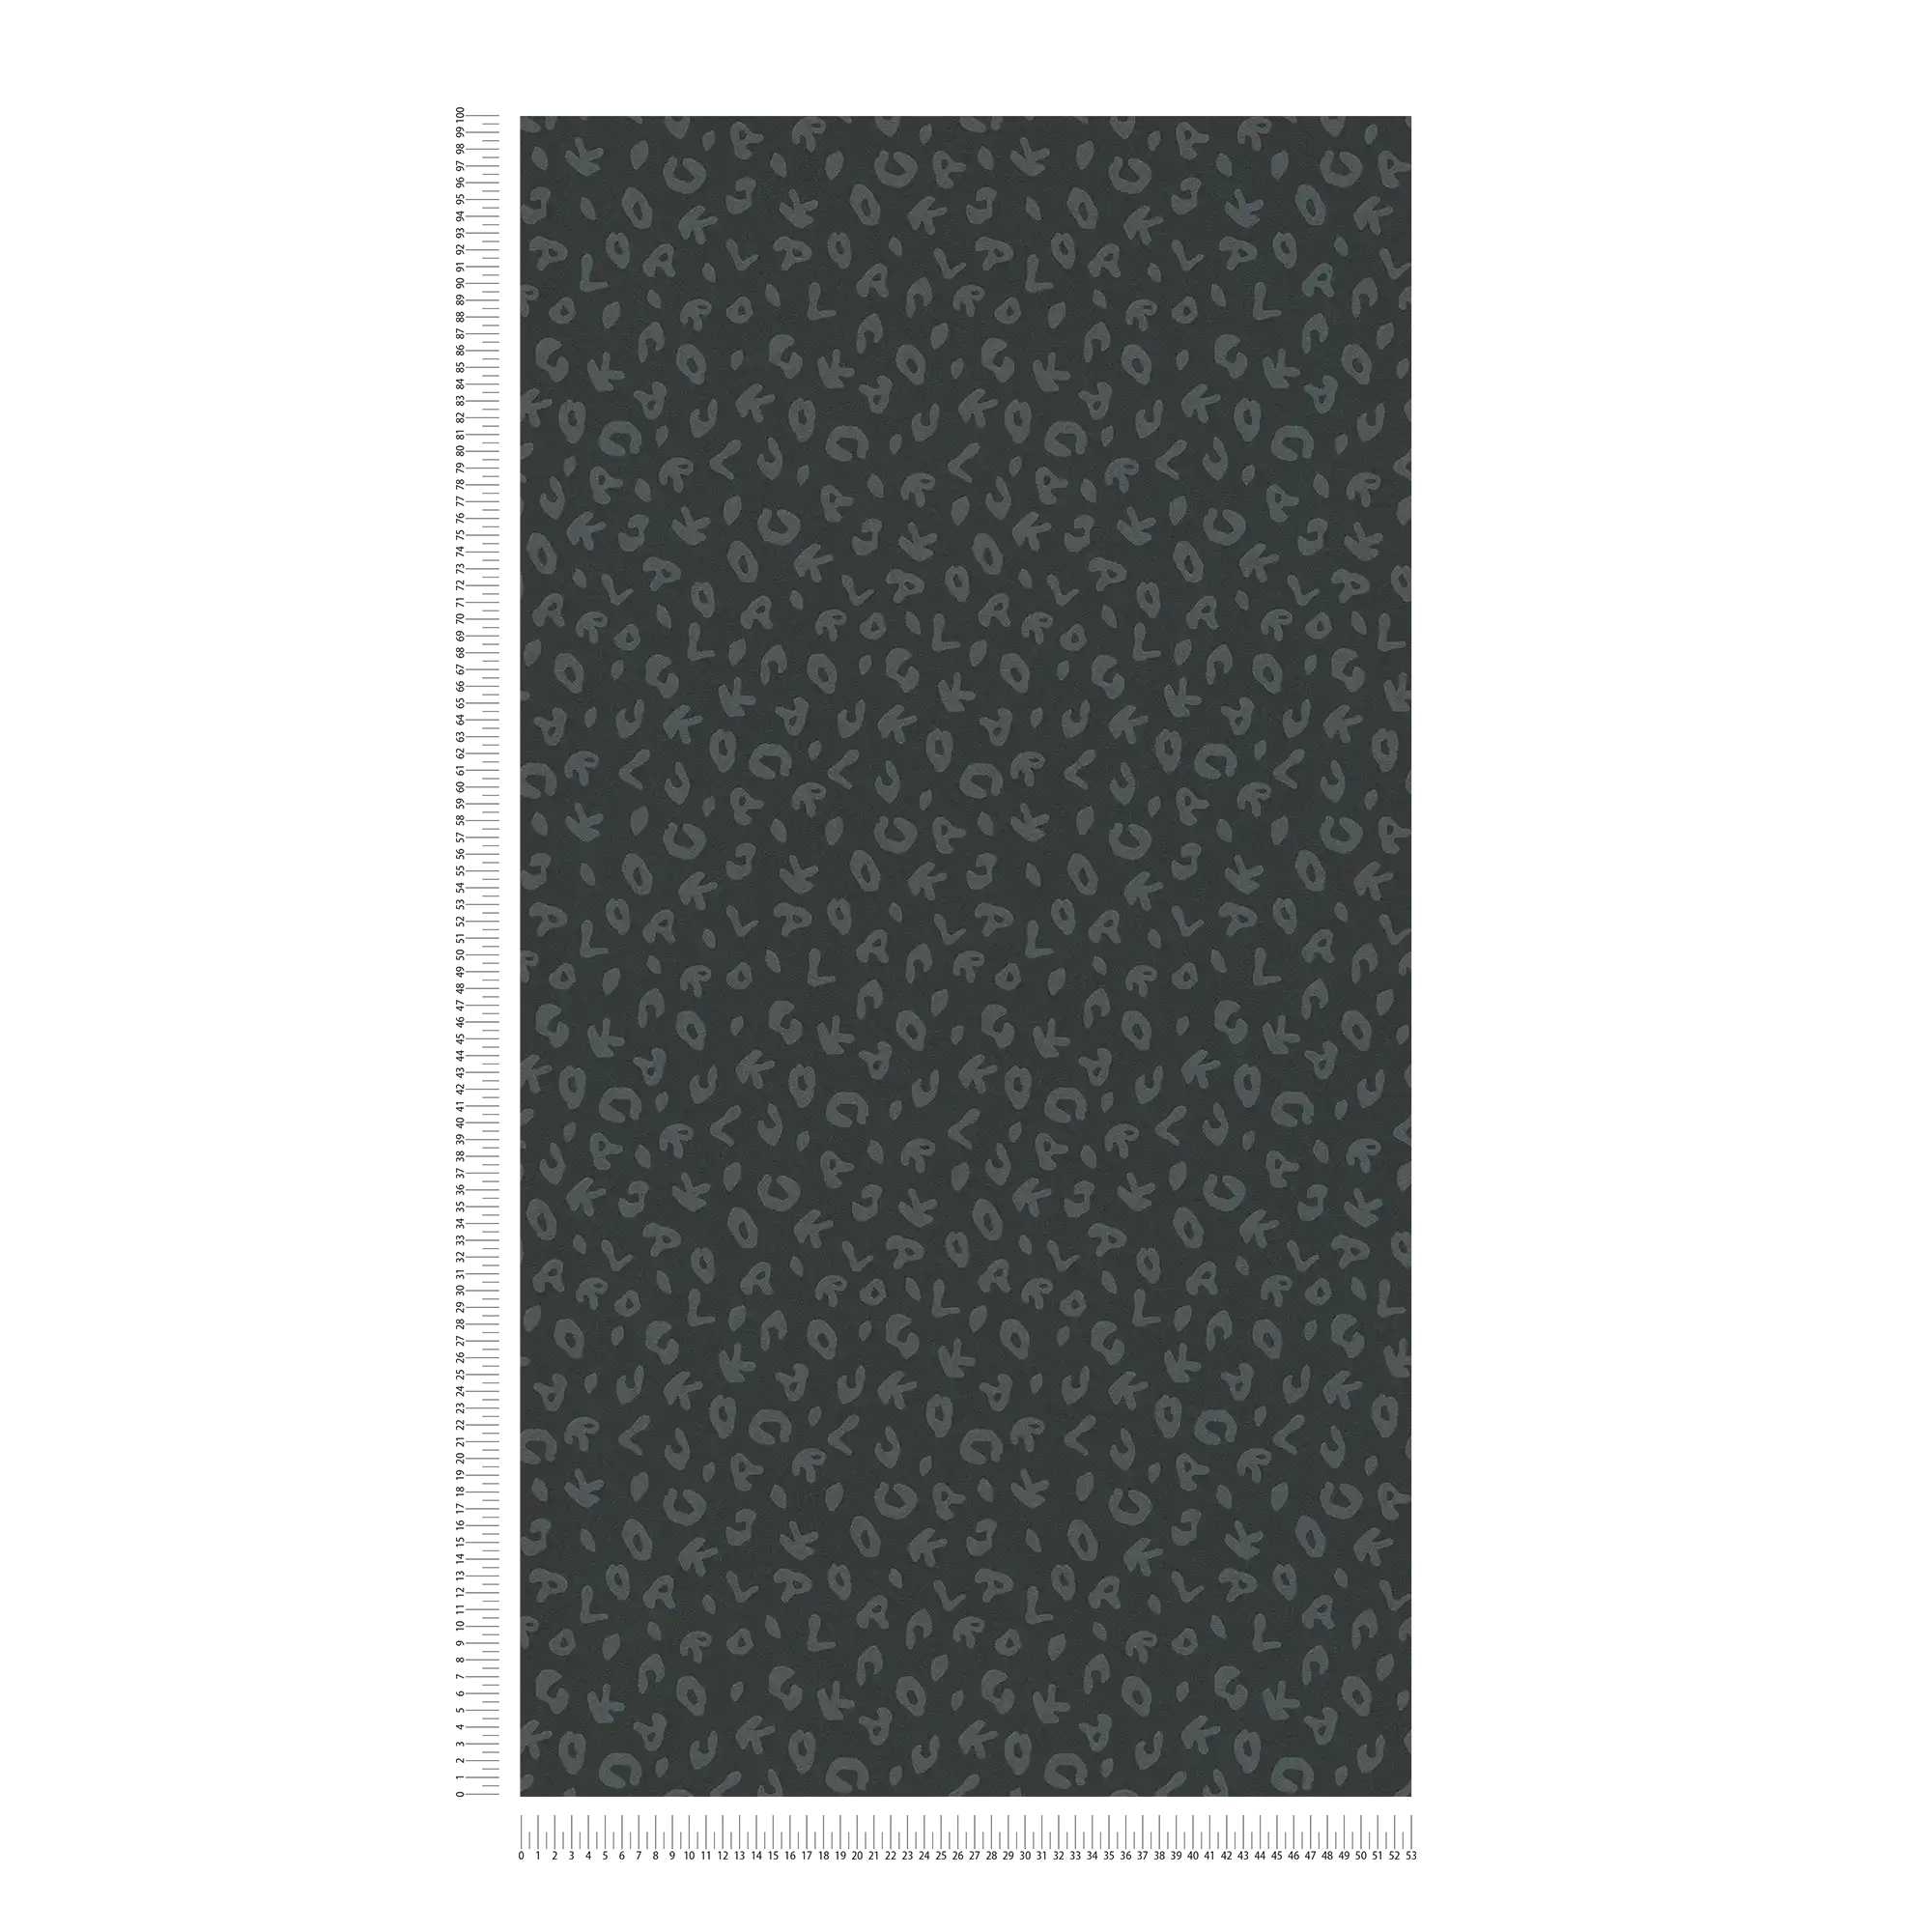             Karl LAGERFELD behang zilver luipaard print - metallic, zwart
        